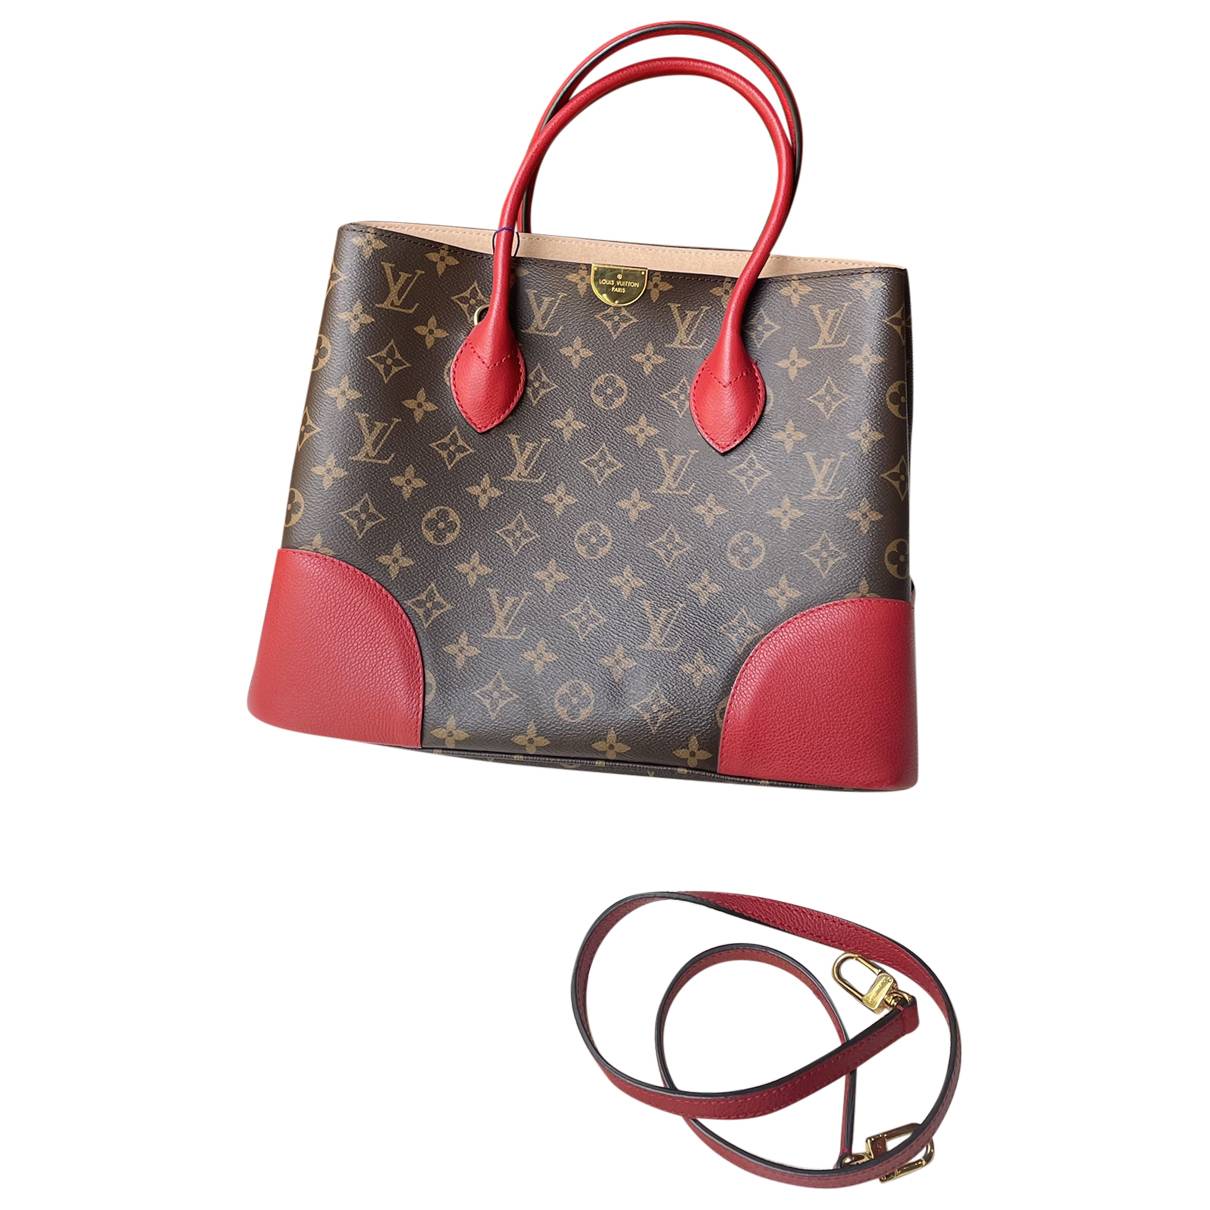 Flandrin leather handbag